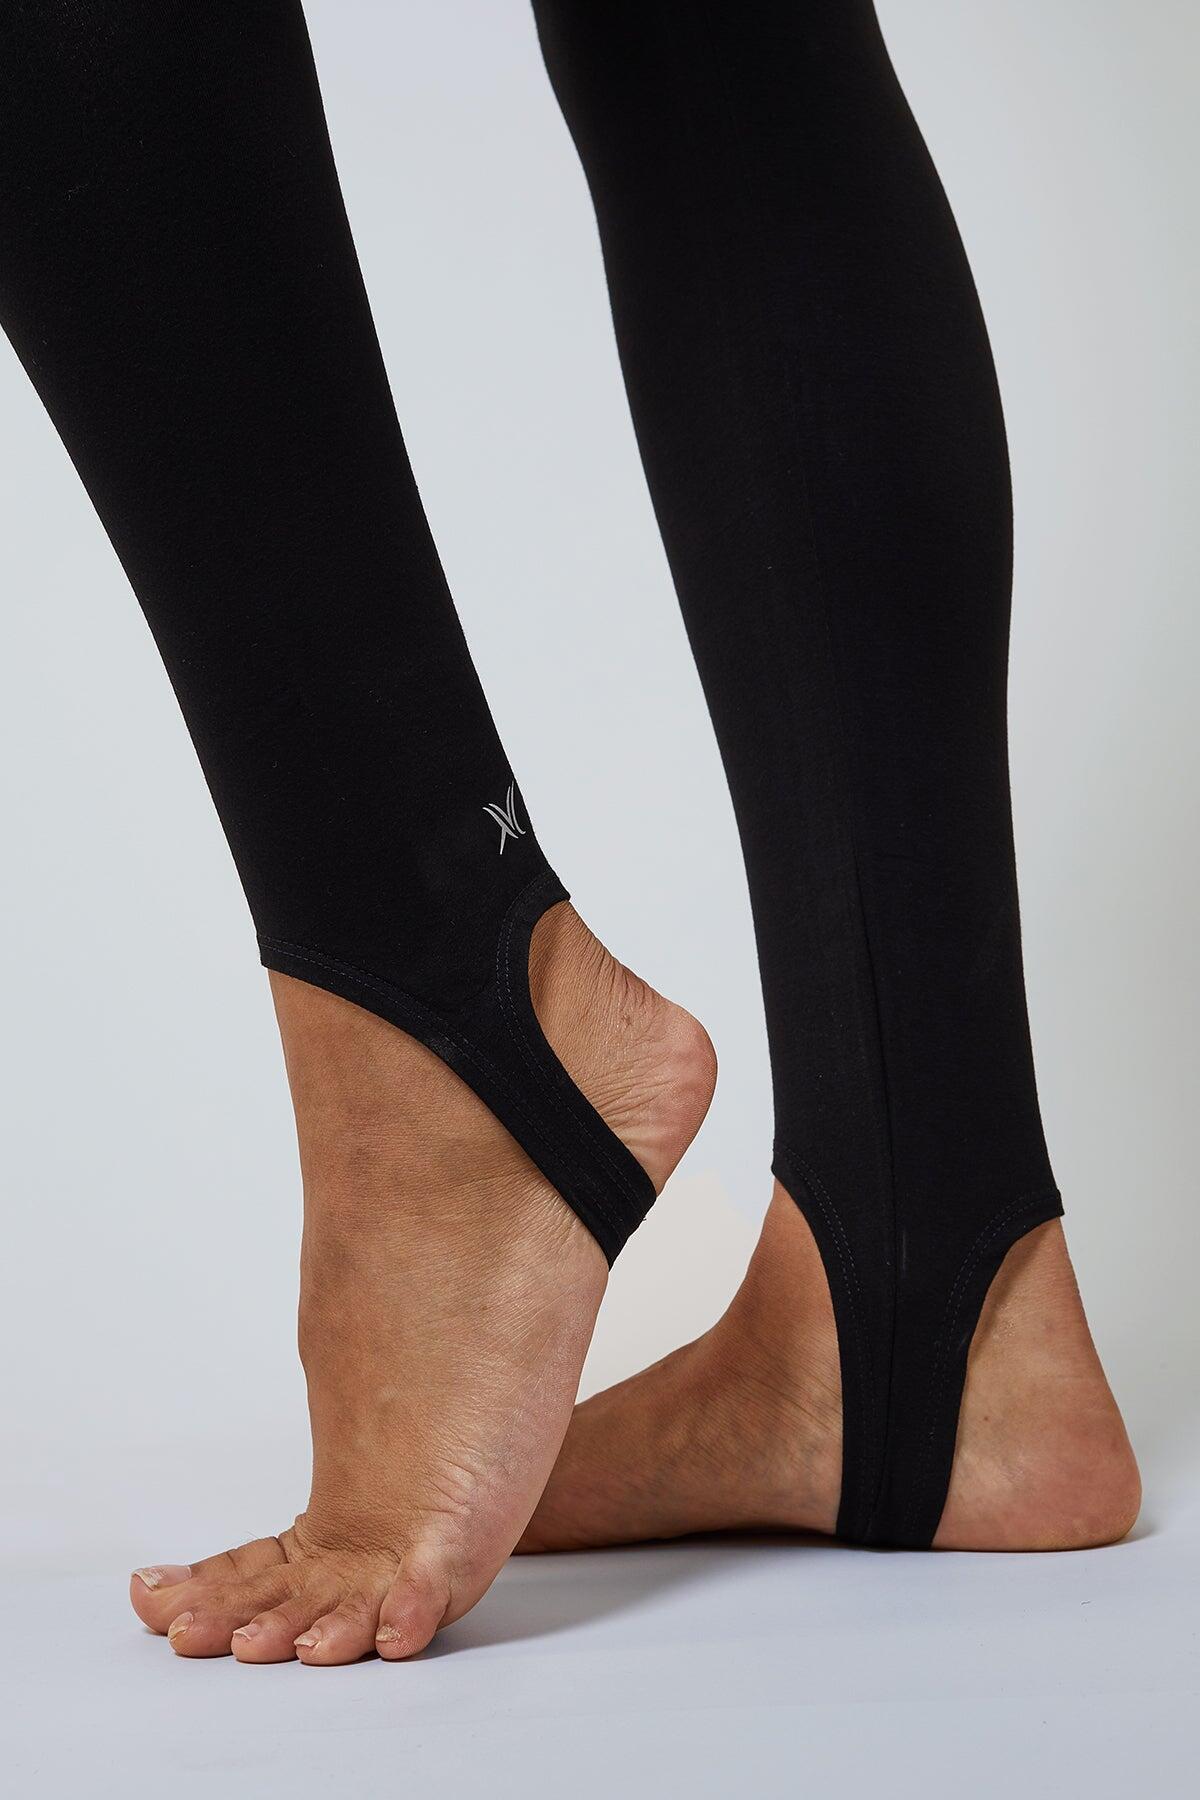 TLC Stirrup Leggings in Jet Black  Stirrup leggings, Comfortable leggings,  Legging